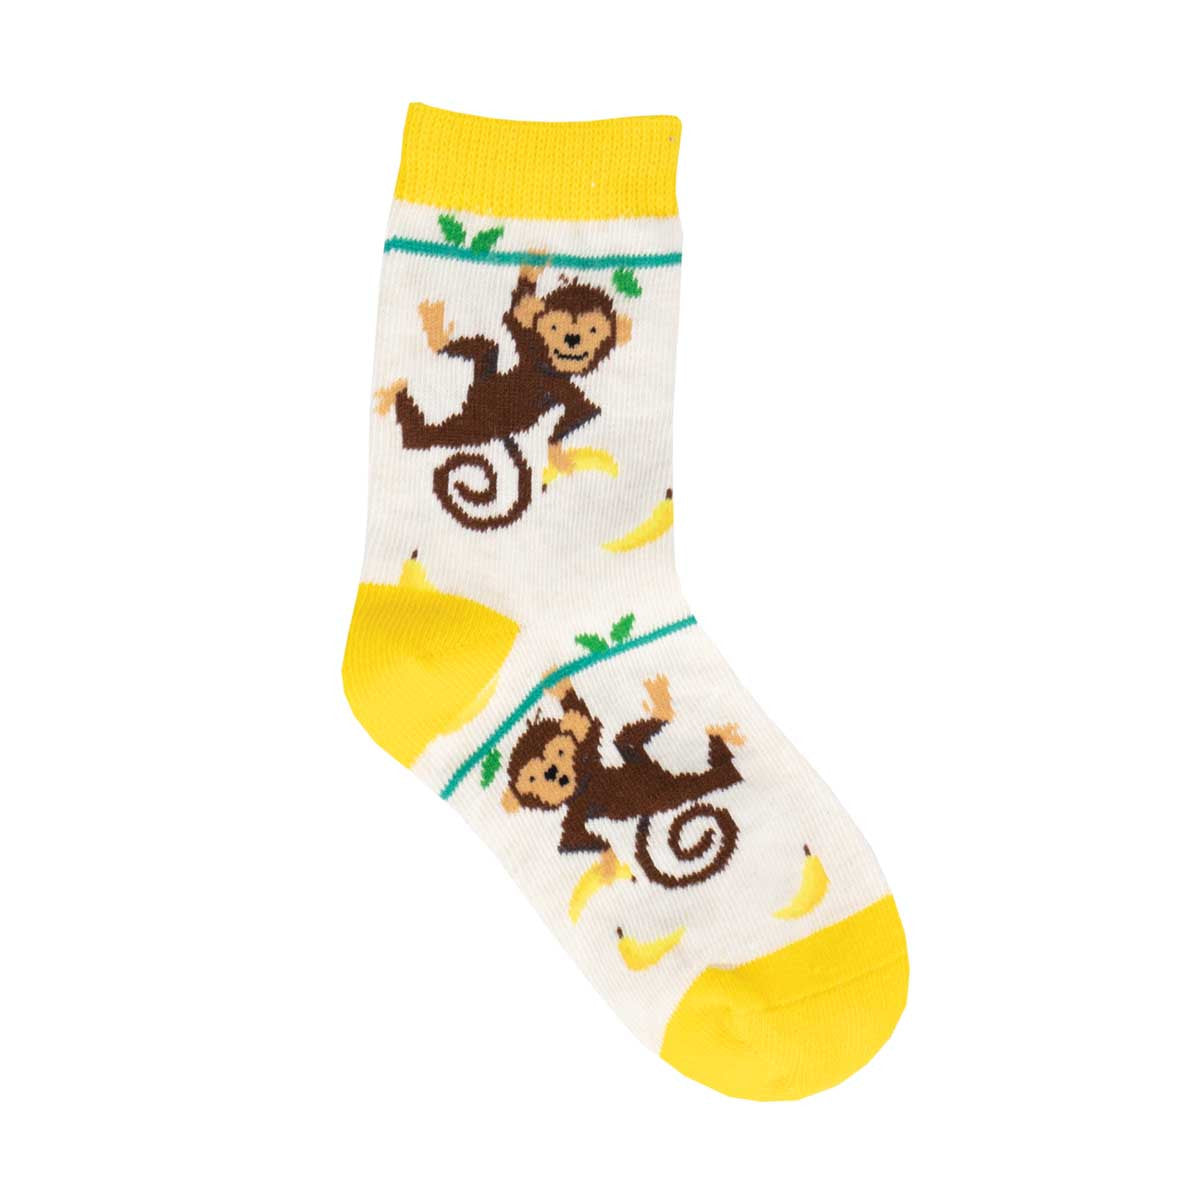 Lil Monkey Kids Socks